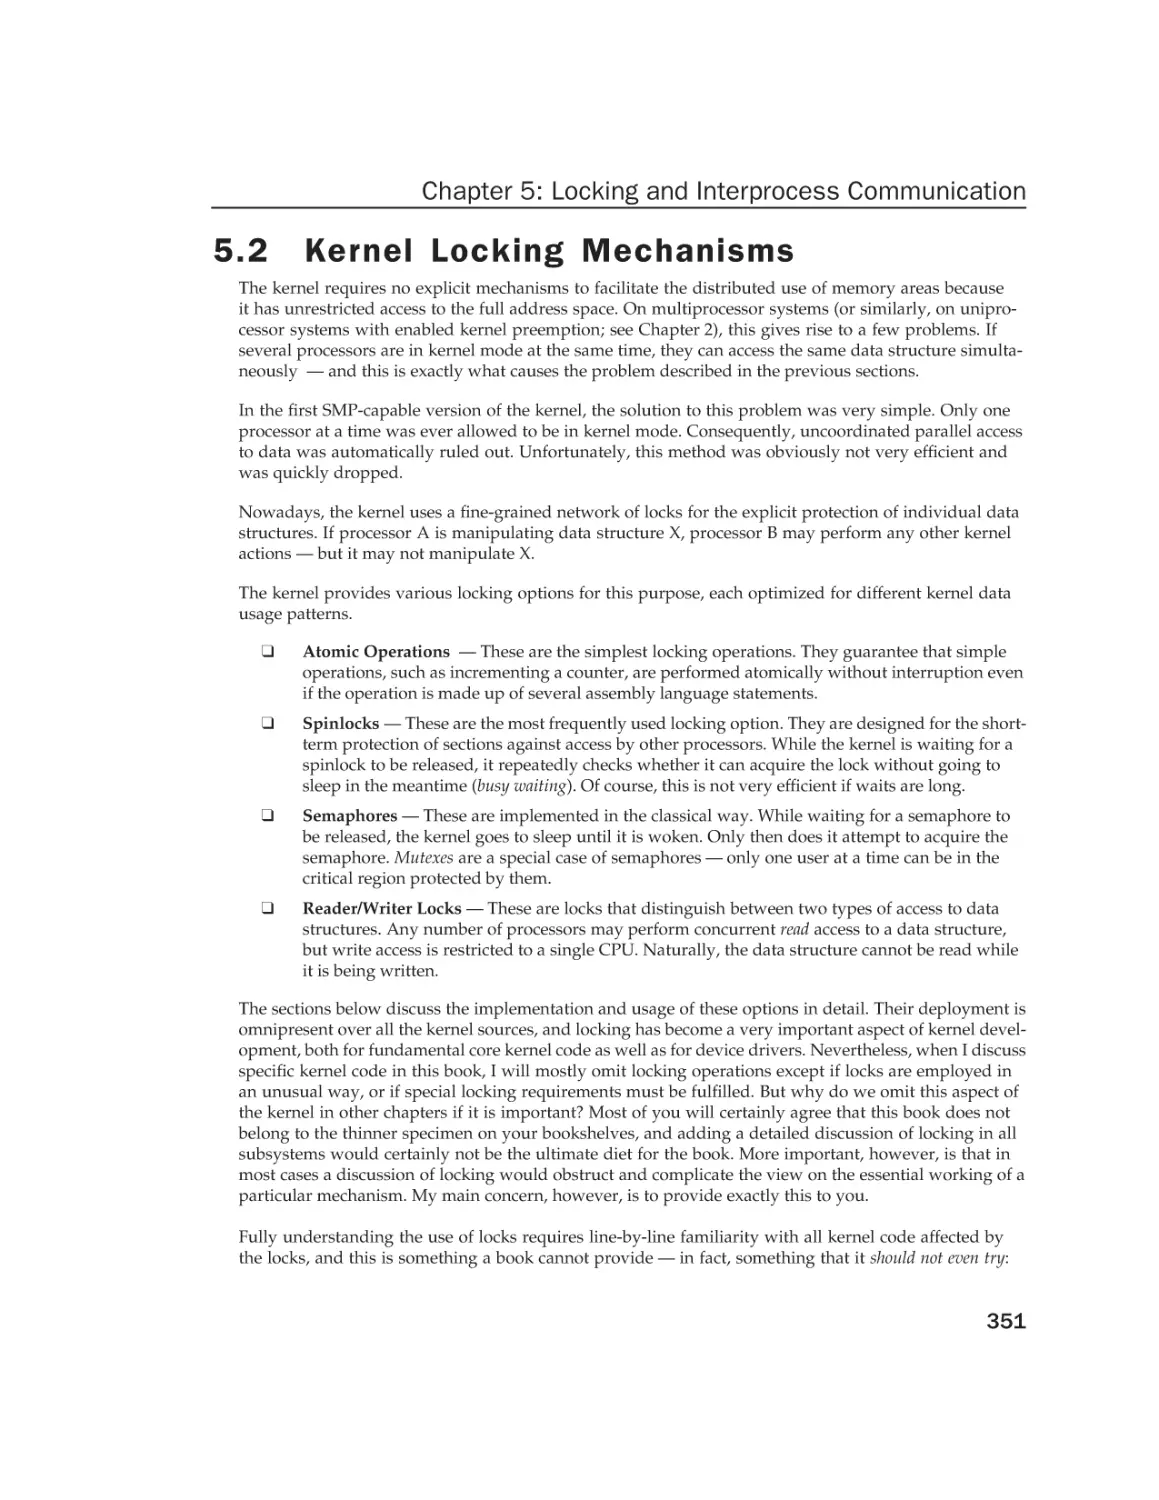 5.2 Kernel Locking Mechanisms